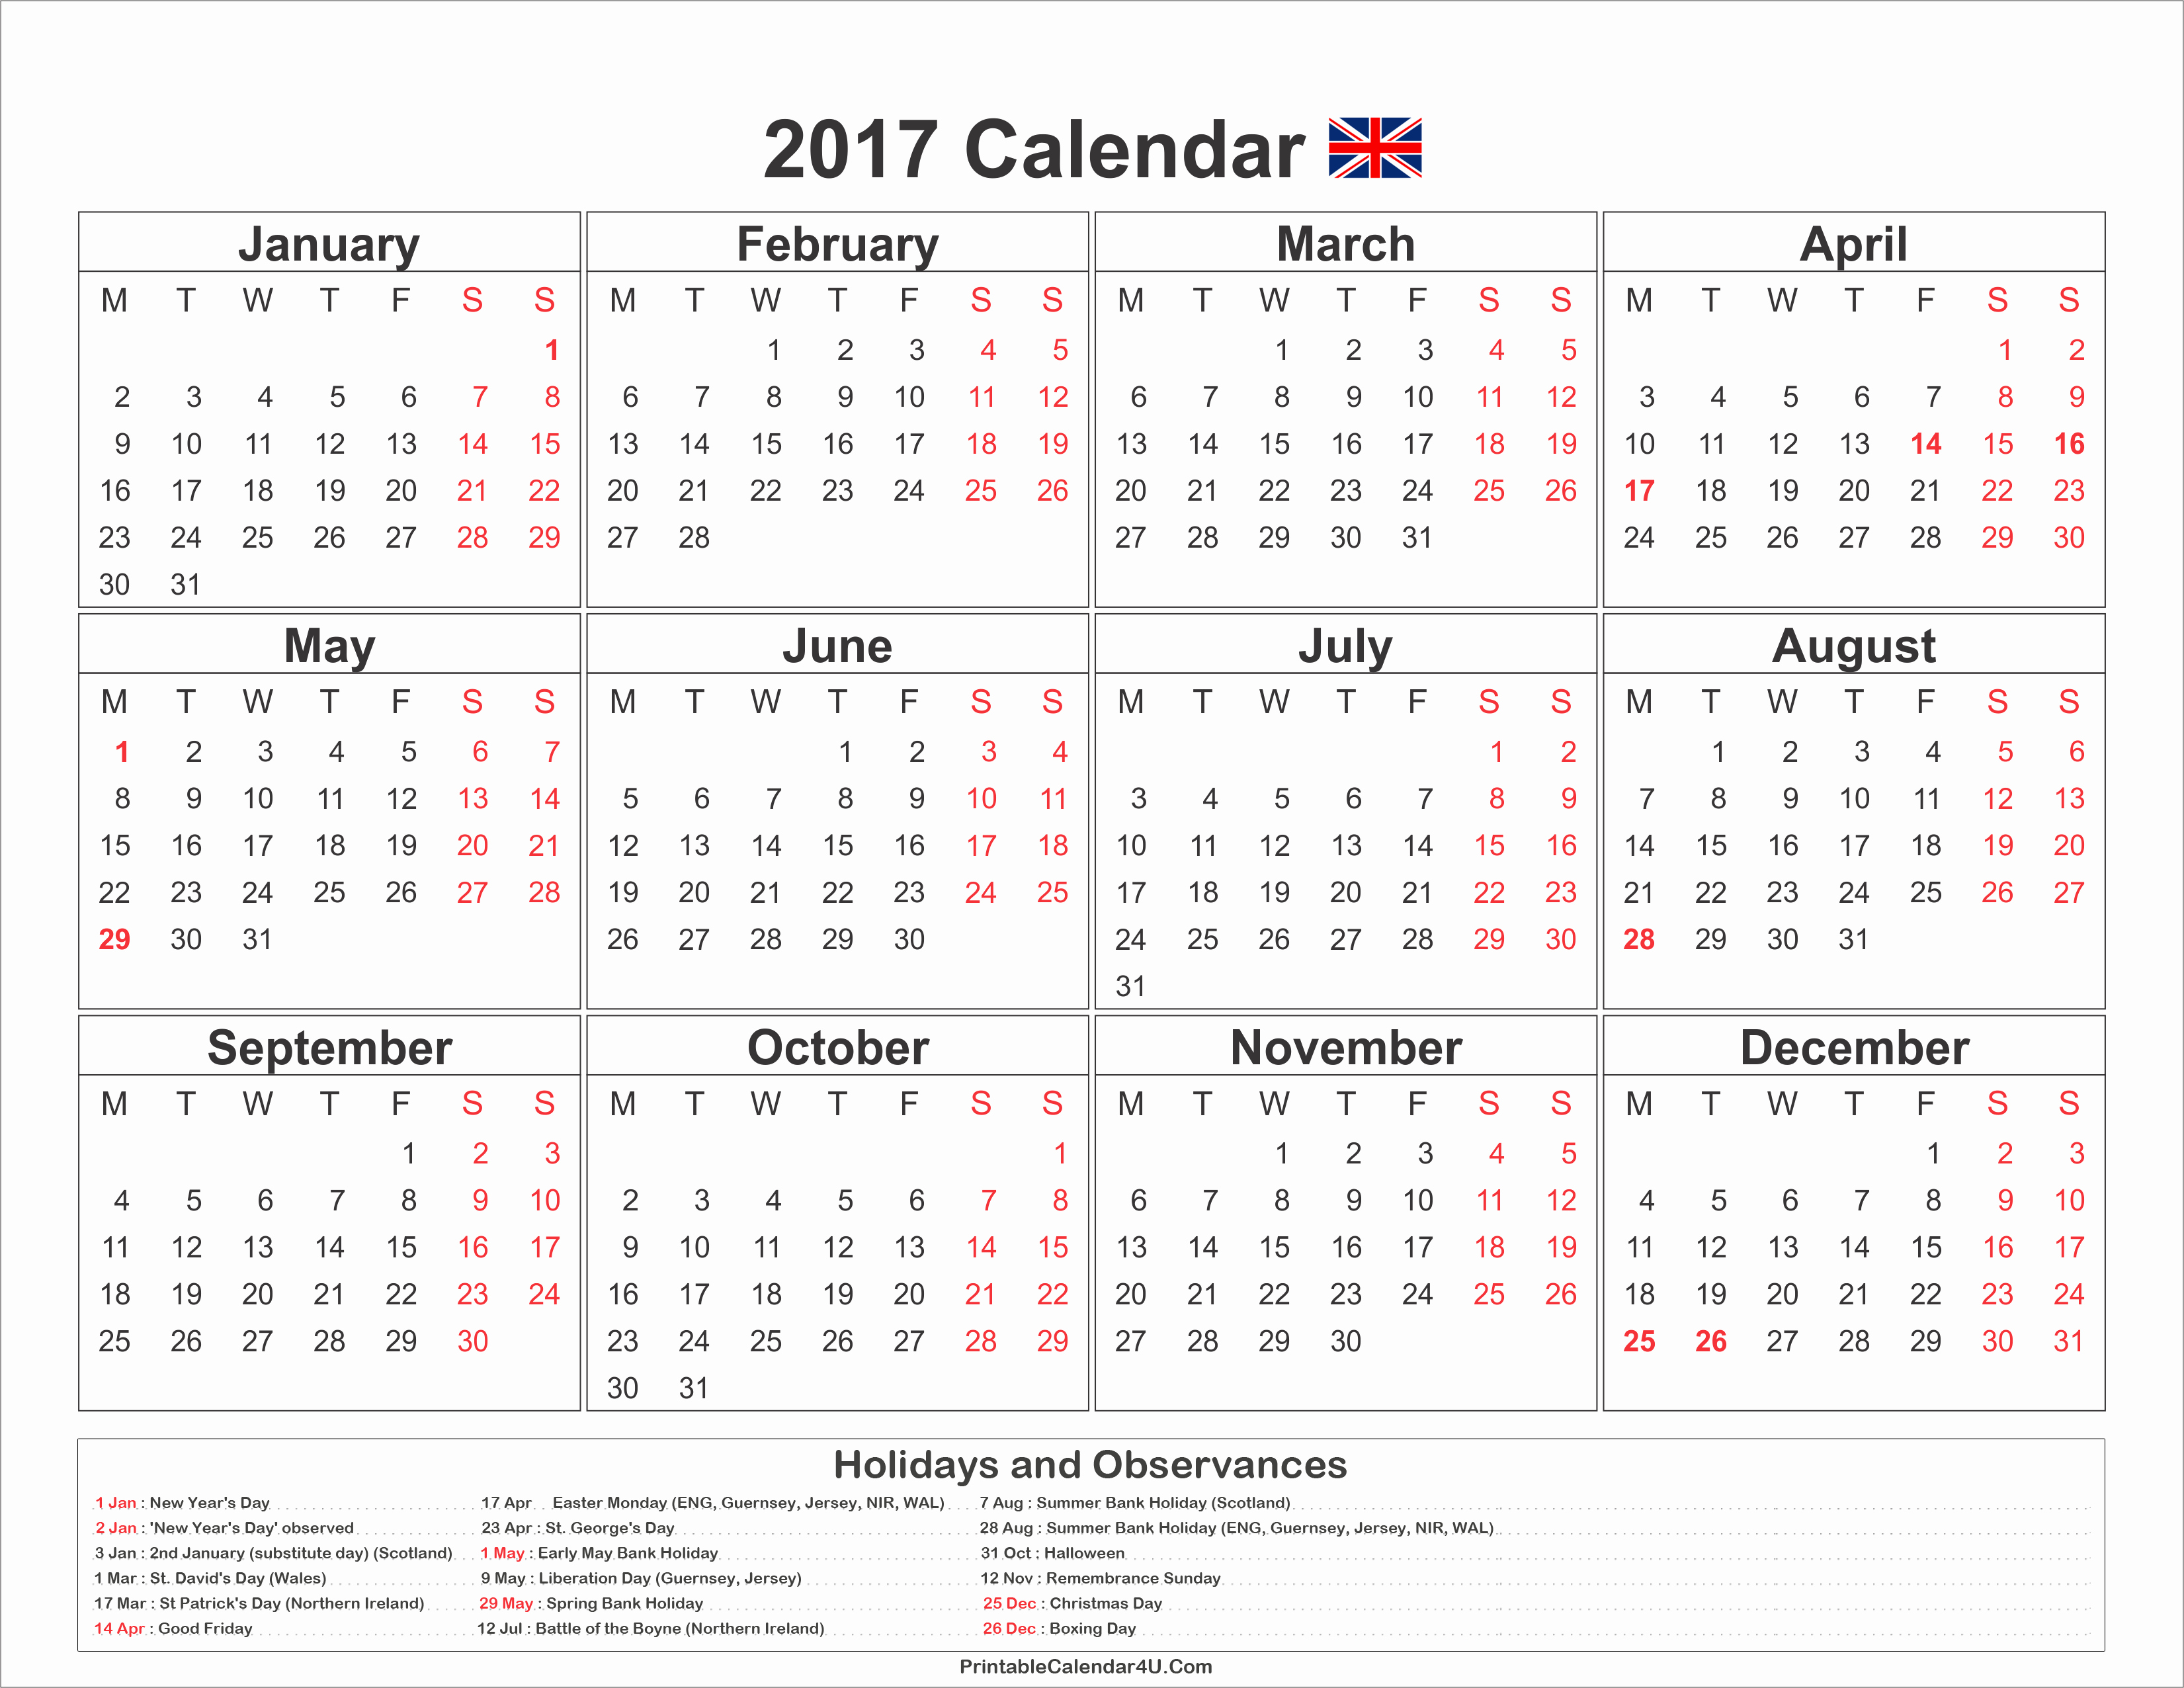 Full Year Calendar 2017 Printable Best Of 2017 Calendar Uk with Holidays Free Printable Calendar 2017